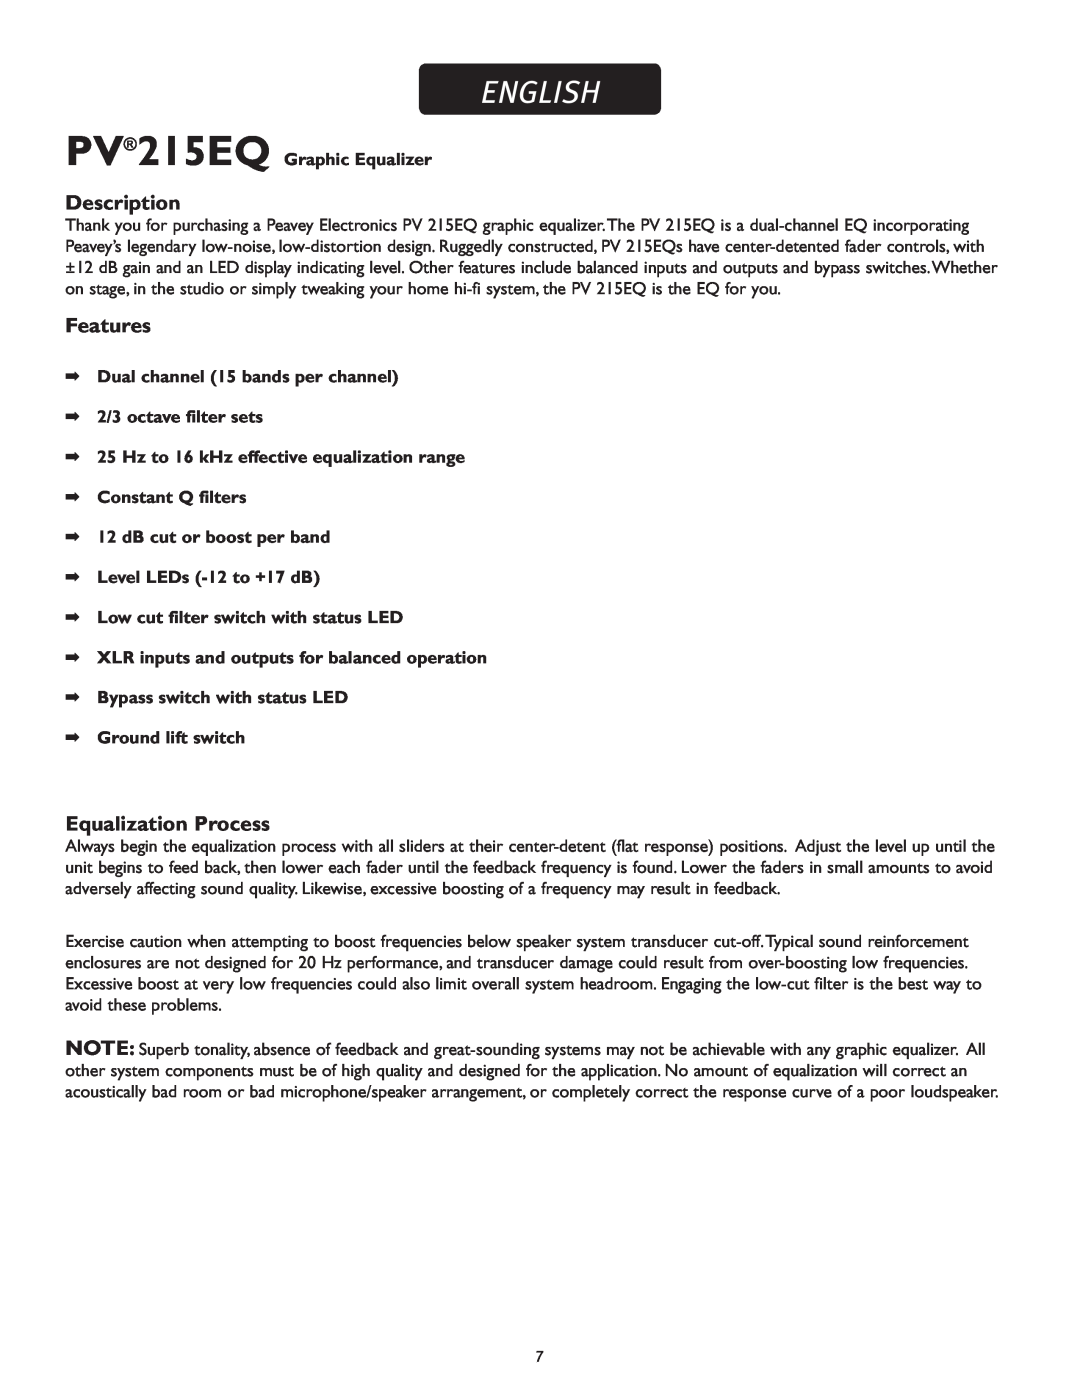 Peavey PV 215 EQ manual English, Description, Features, Equalization Process 